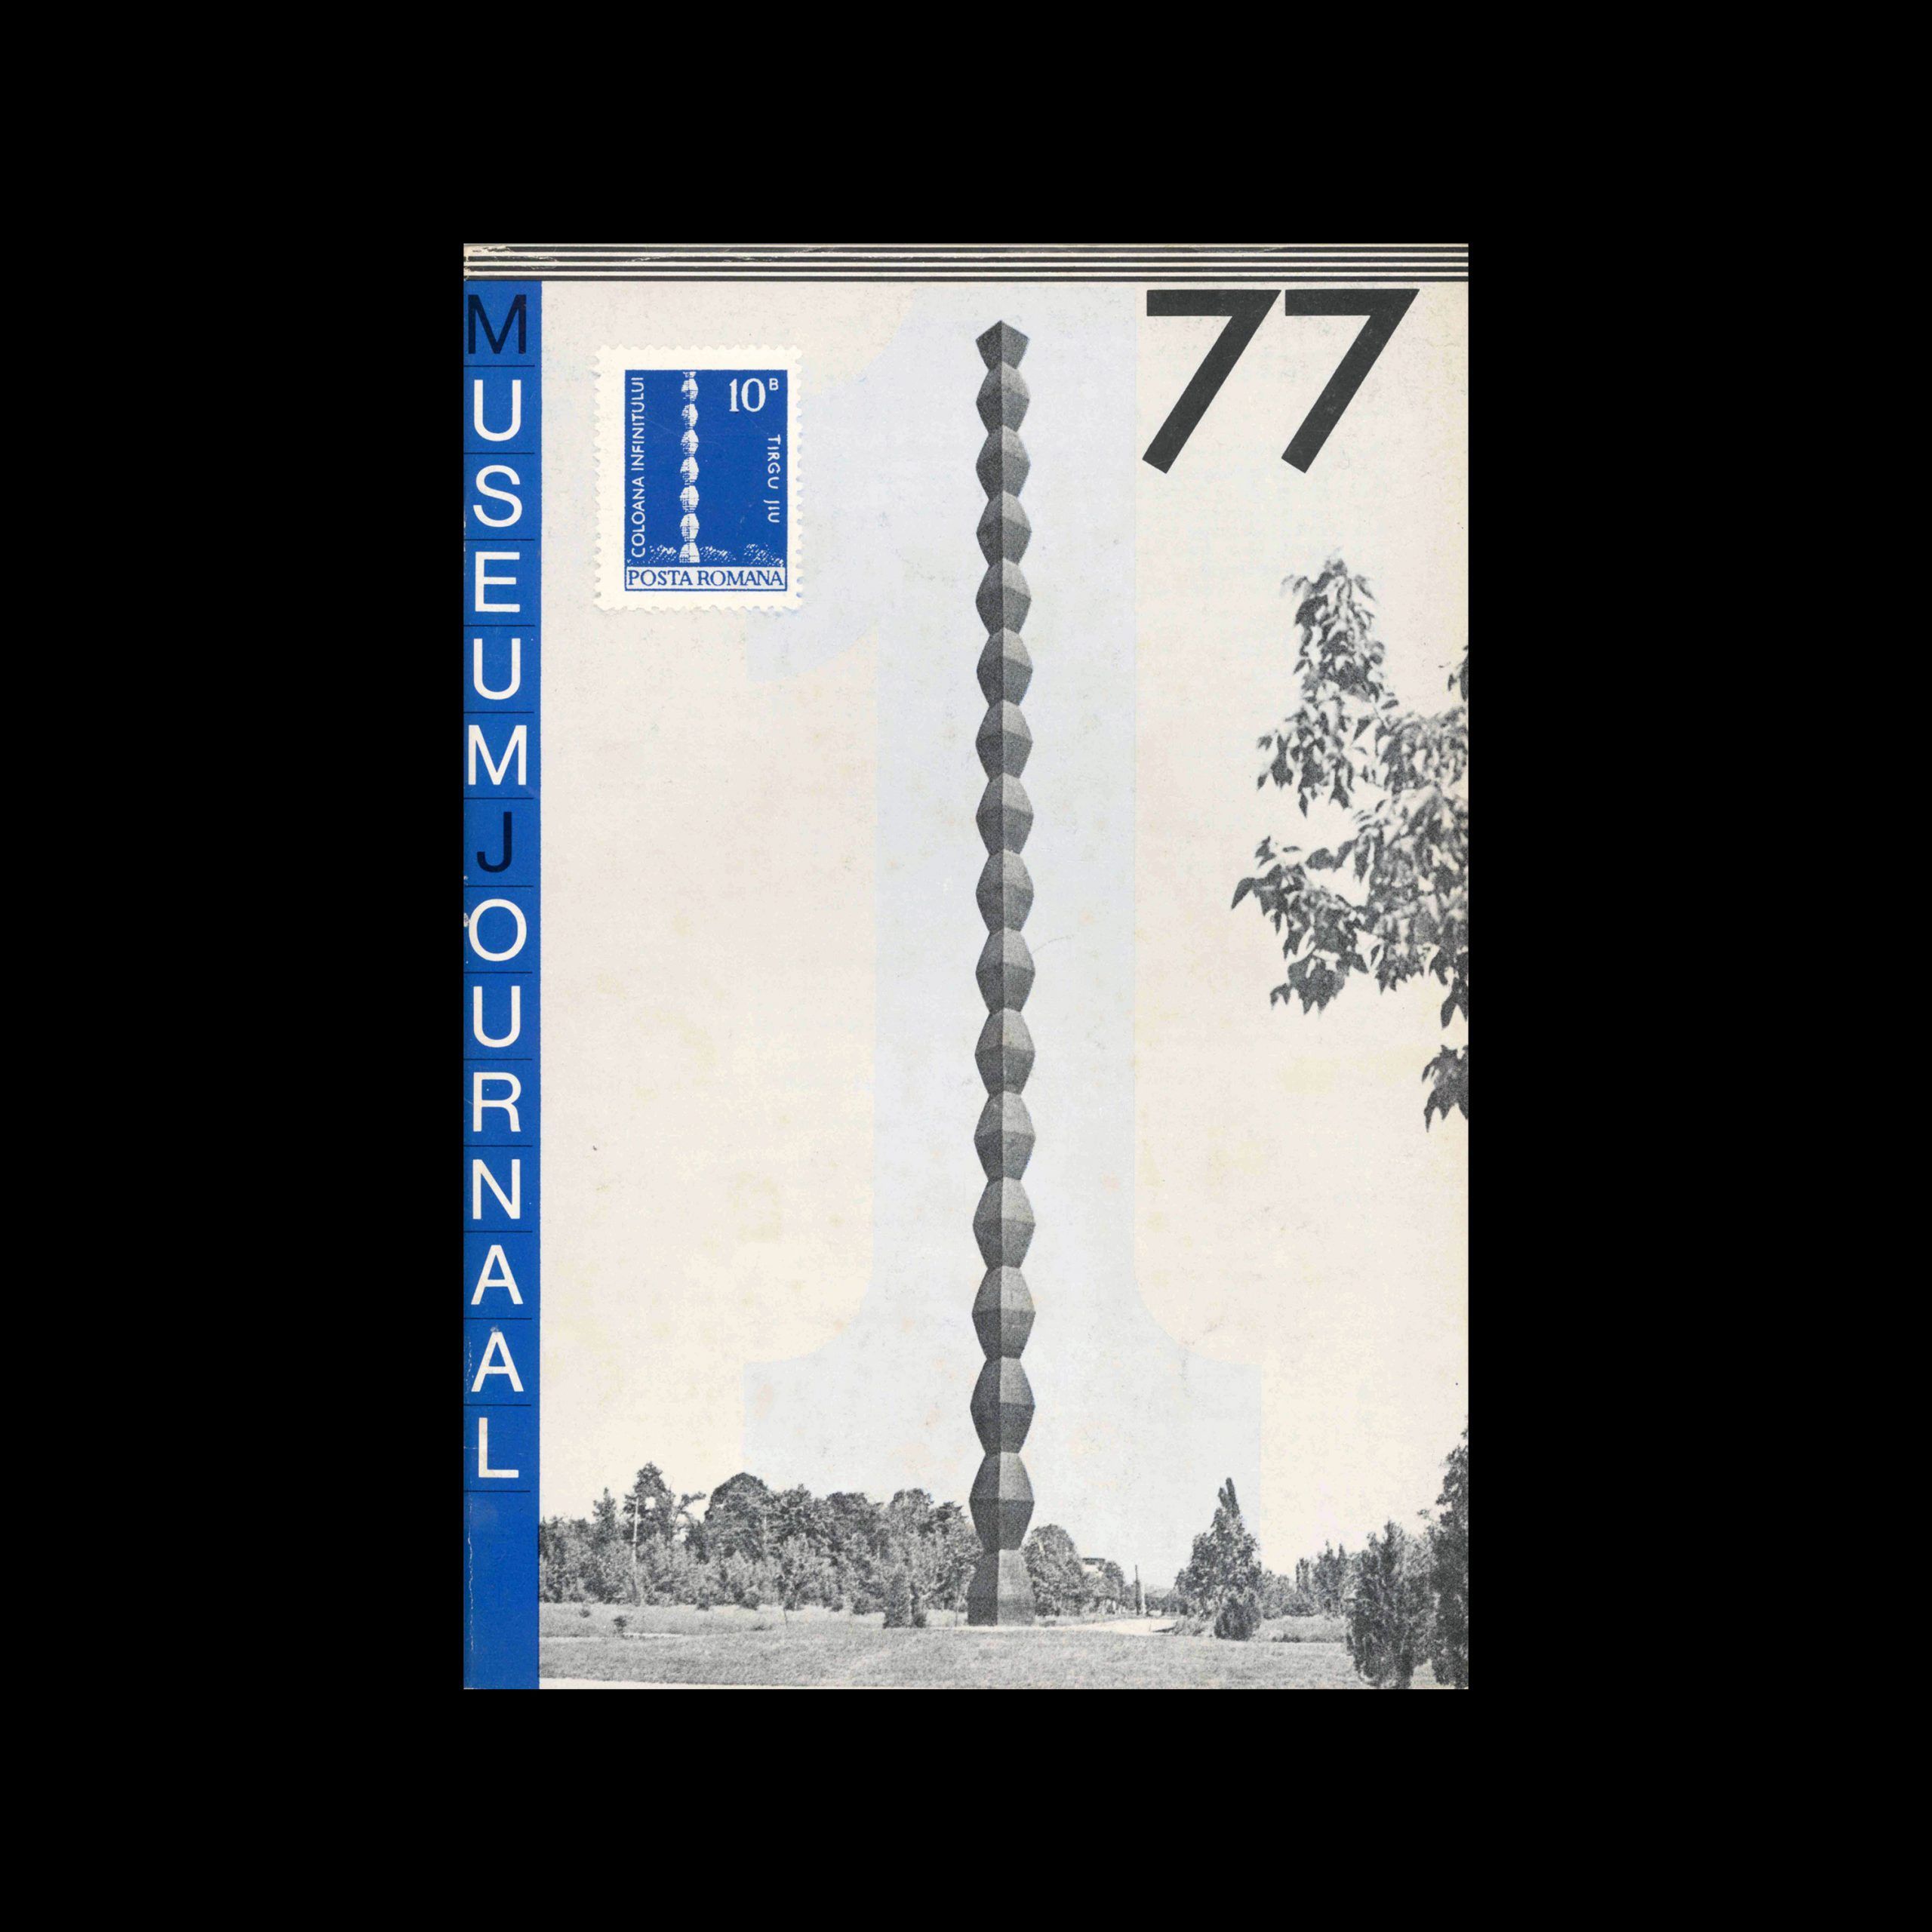 Museumjournaal, Serie 22 no1, 1977. Layout: Frans Evenhuis and Piet van Meiji | Cover: Swip Stolk